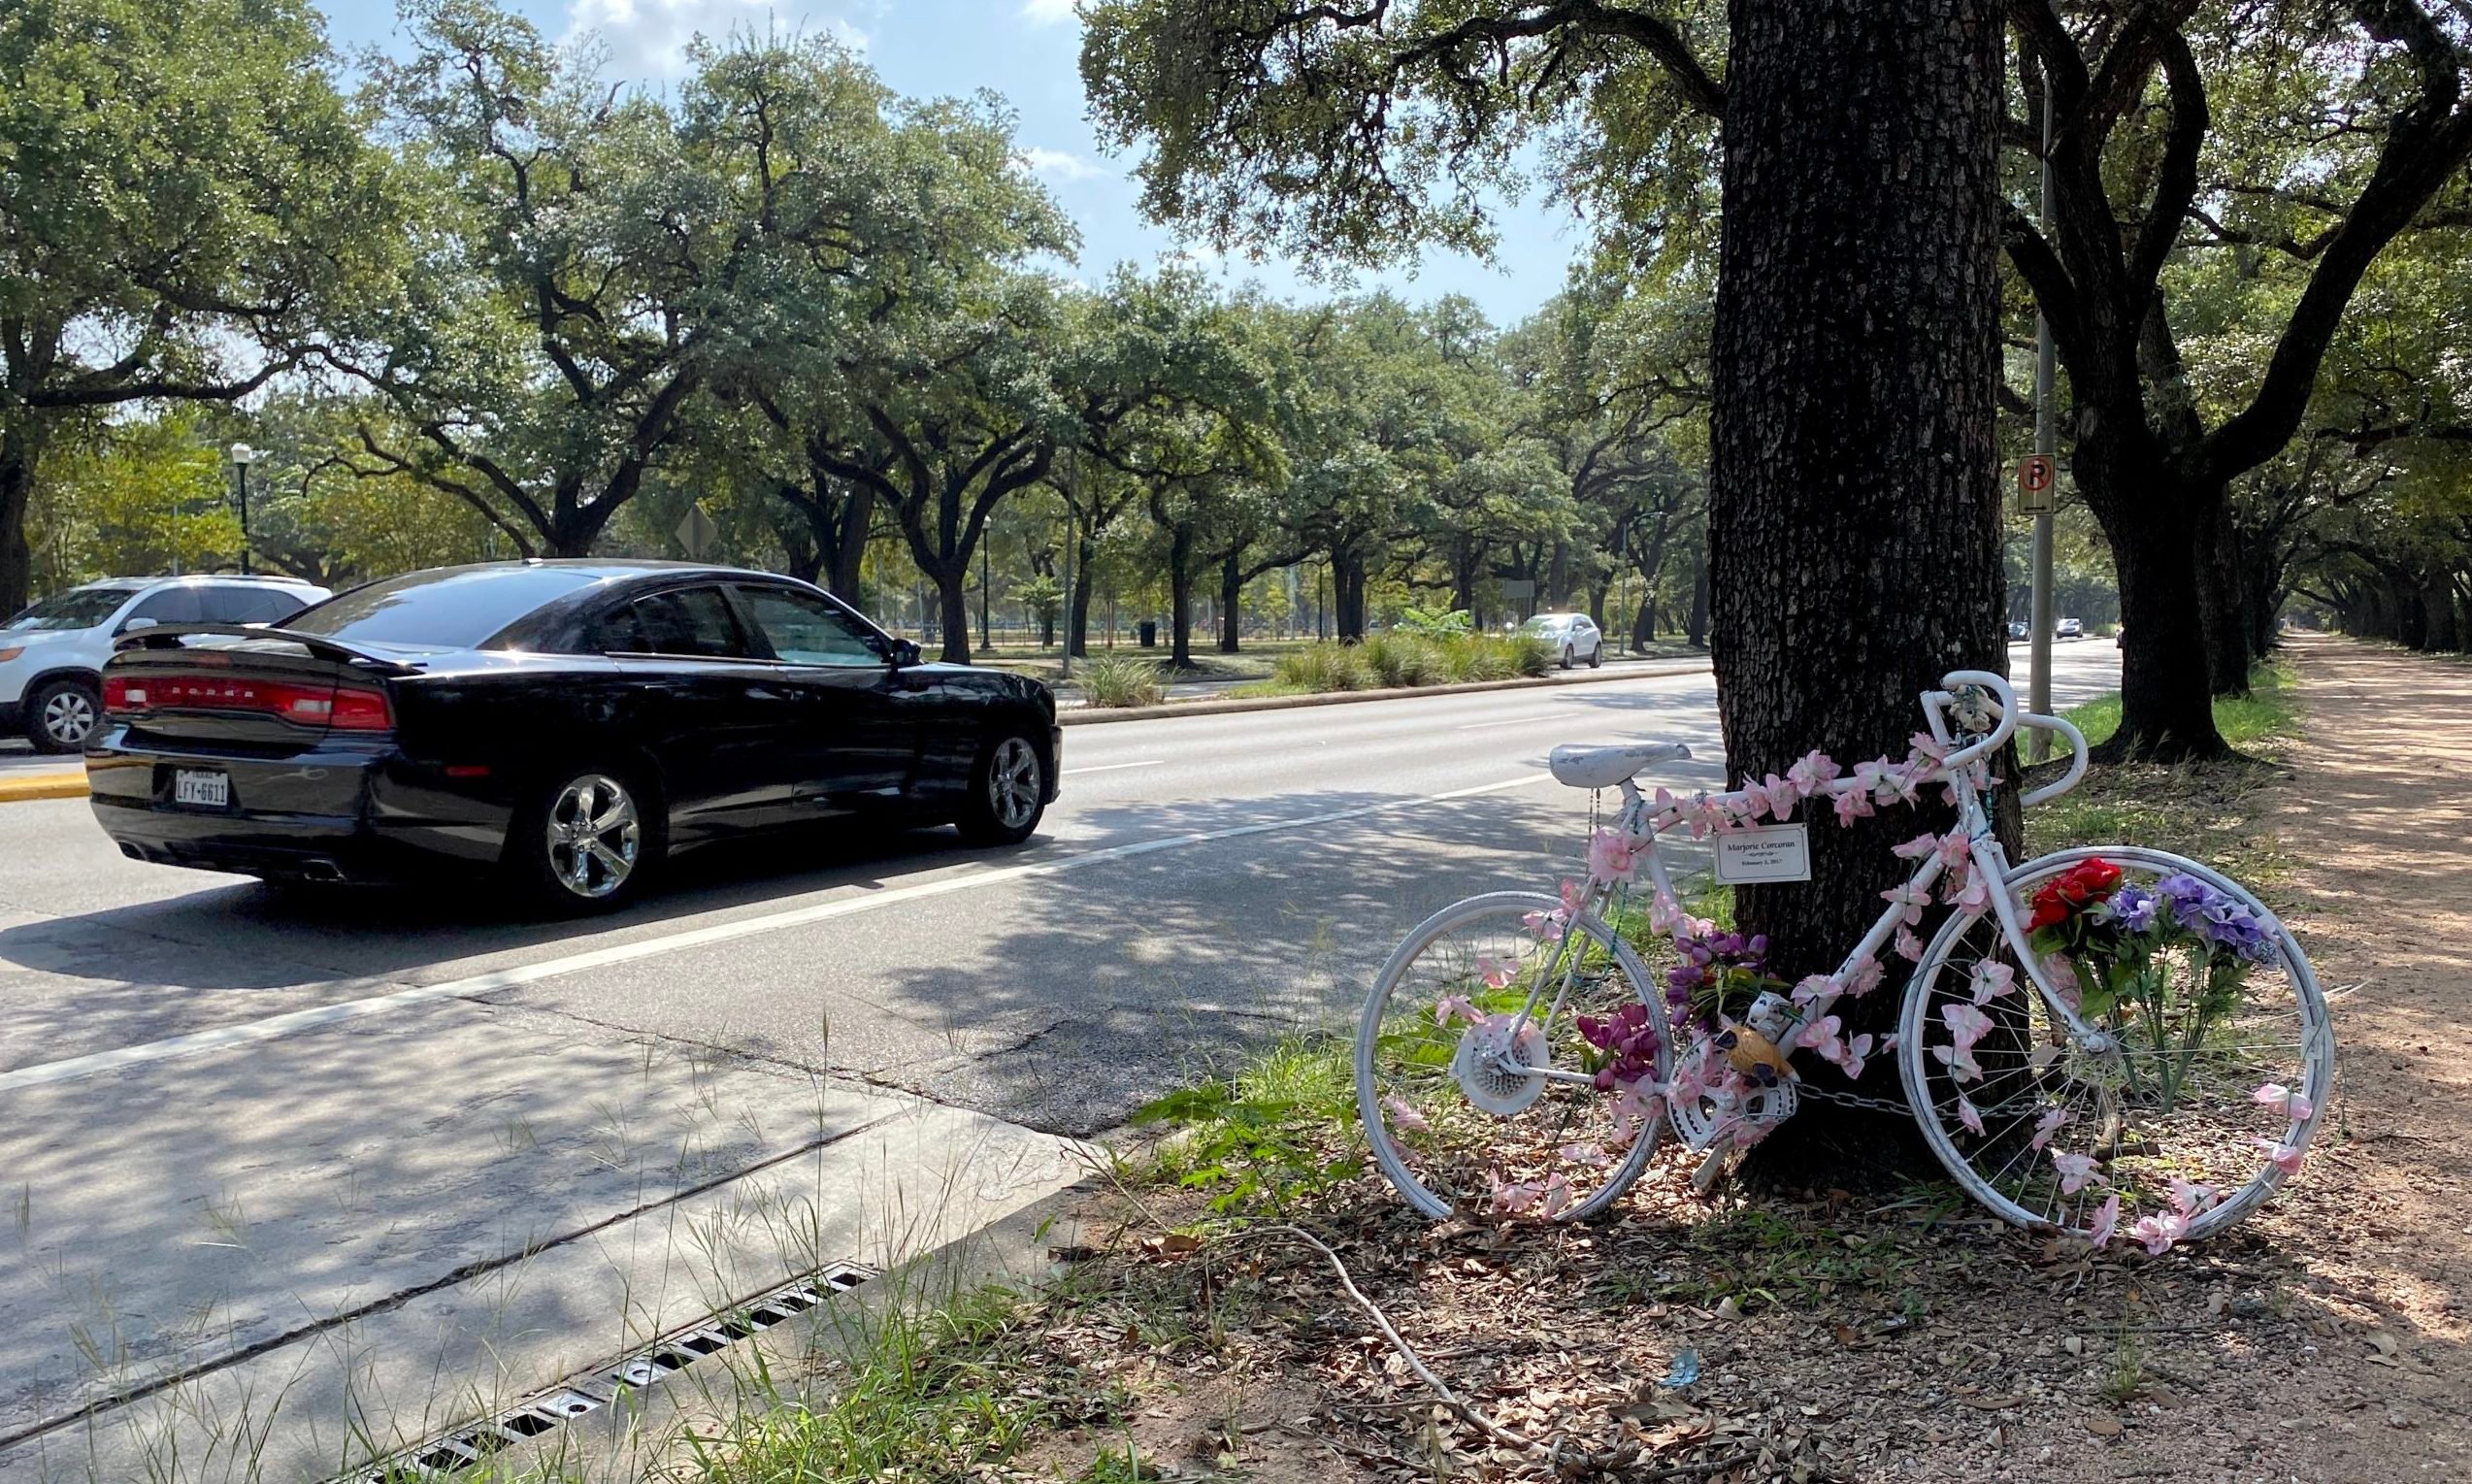 The ghost bike memorial to Marjorie Corcoran and Sudipta Roy.